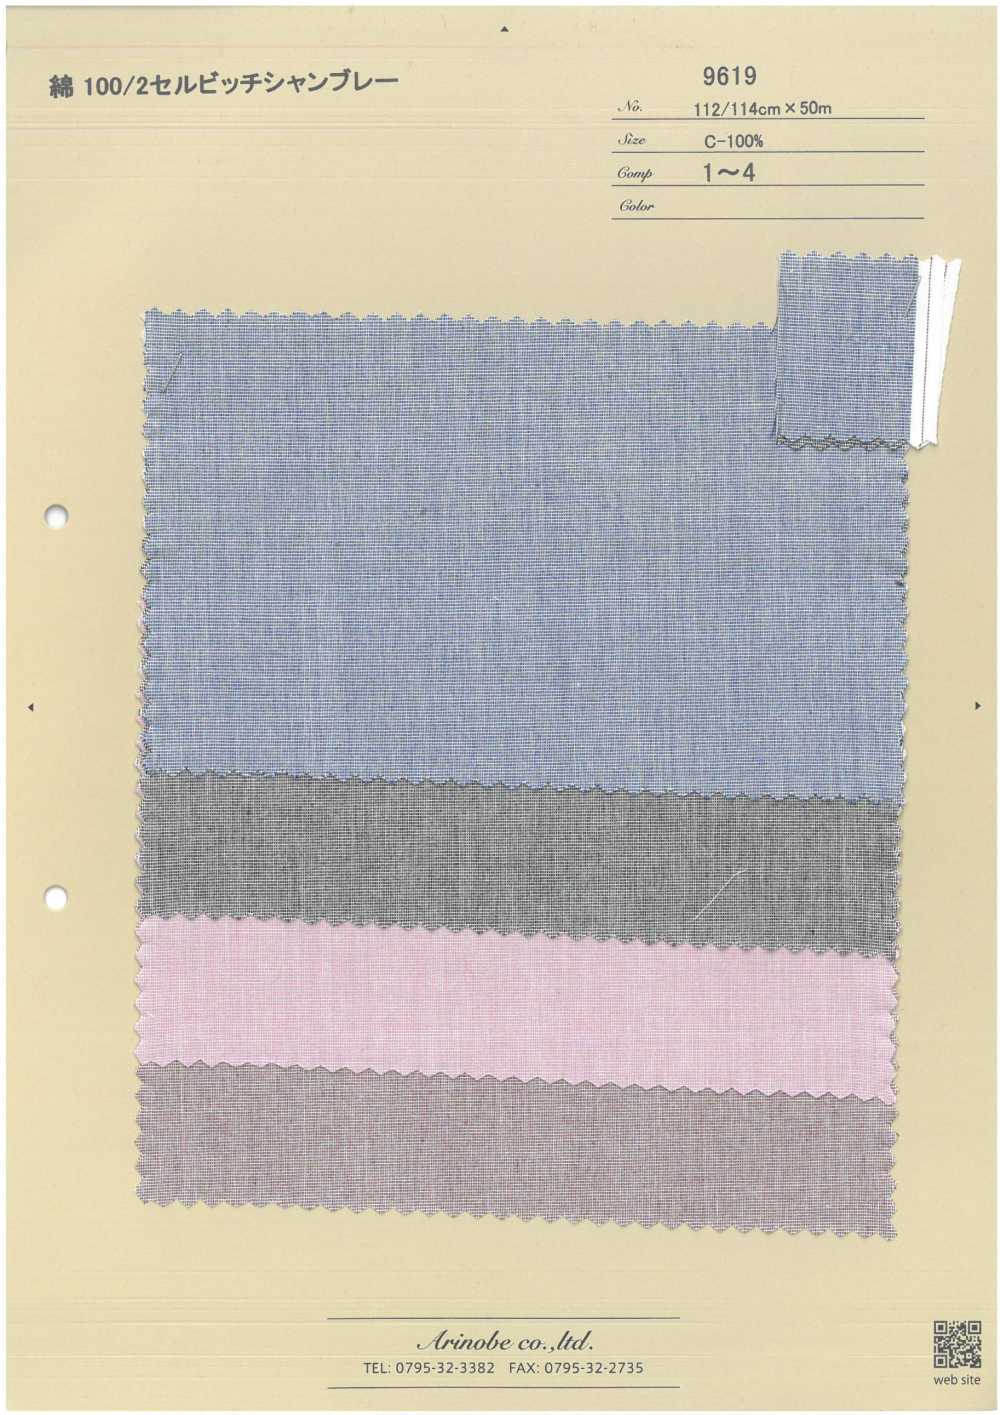 9619 Chambray Lisière Coton 100/2[Fabrication De Textile] ARINOBE CO., LTD.